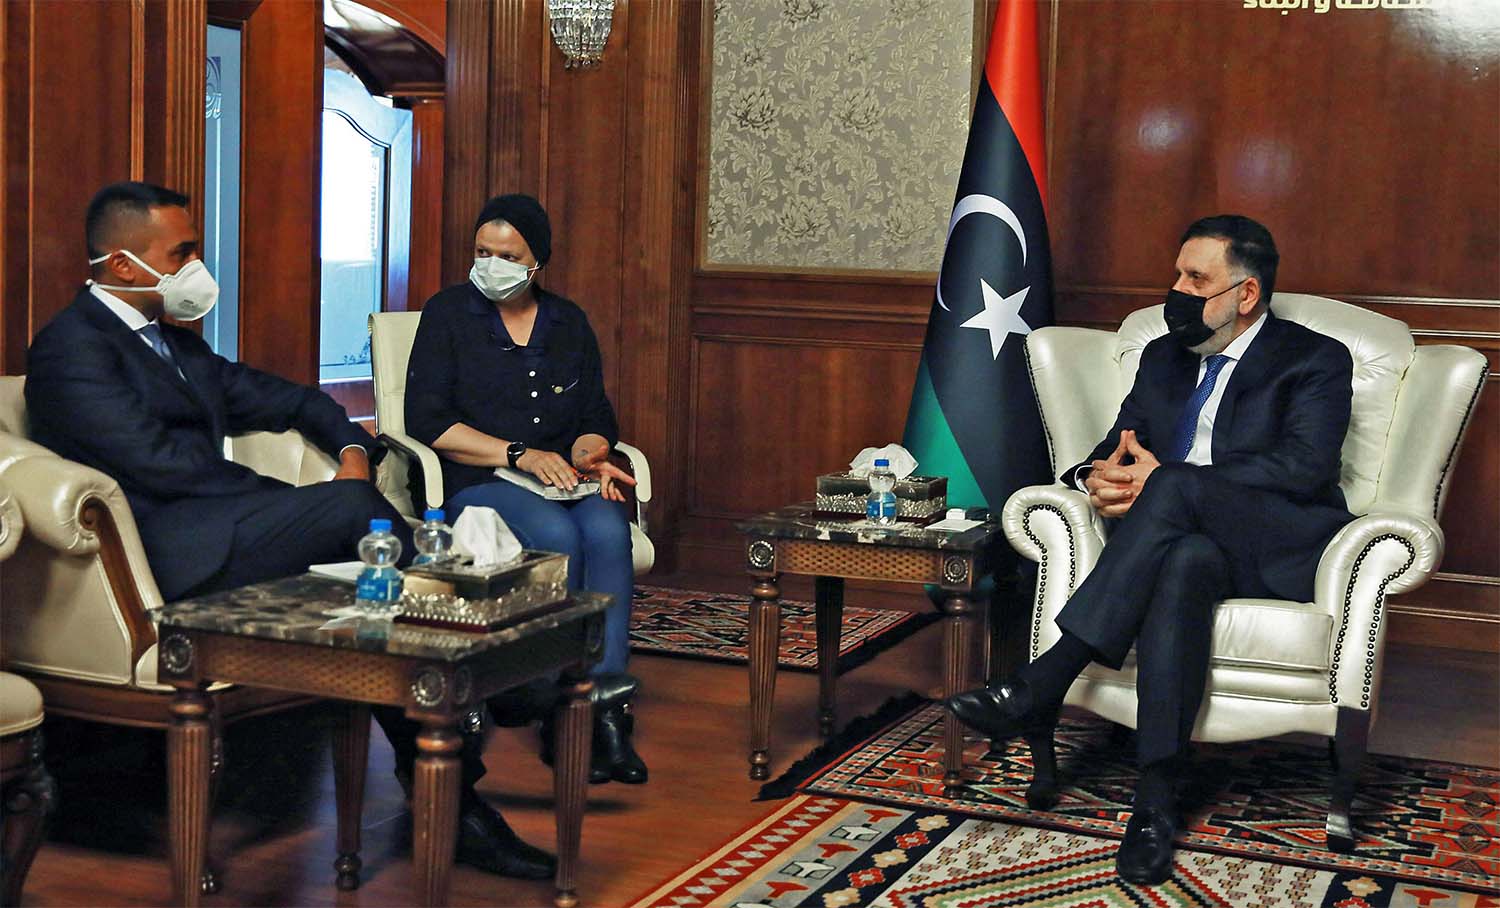 Italian Foreign Minister Luigi Di Maio (L) meets with the head of the Tripoli-based Government of National Accord Fayez al-Sarraj in Tripoli 